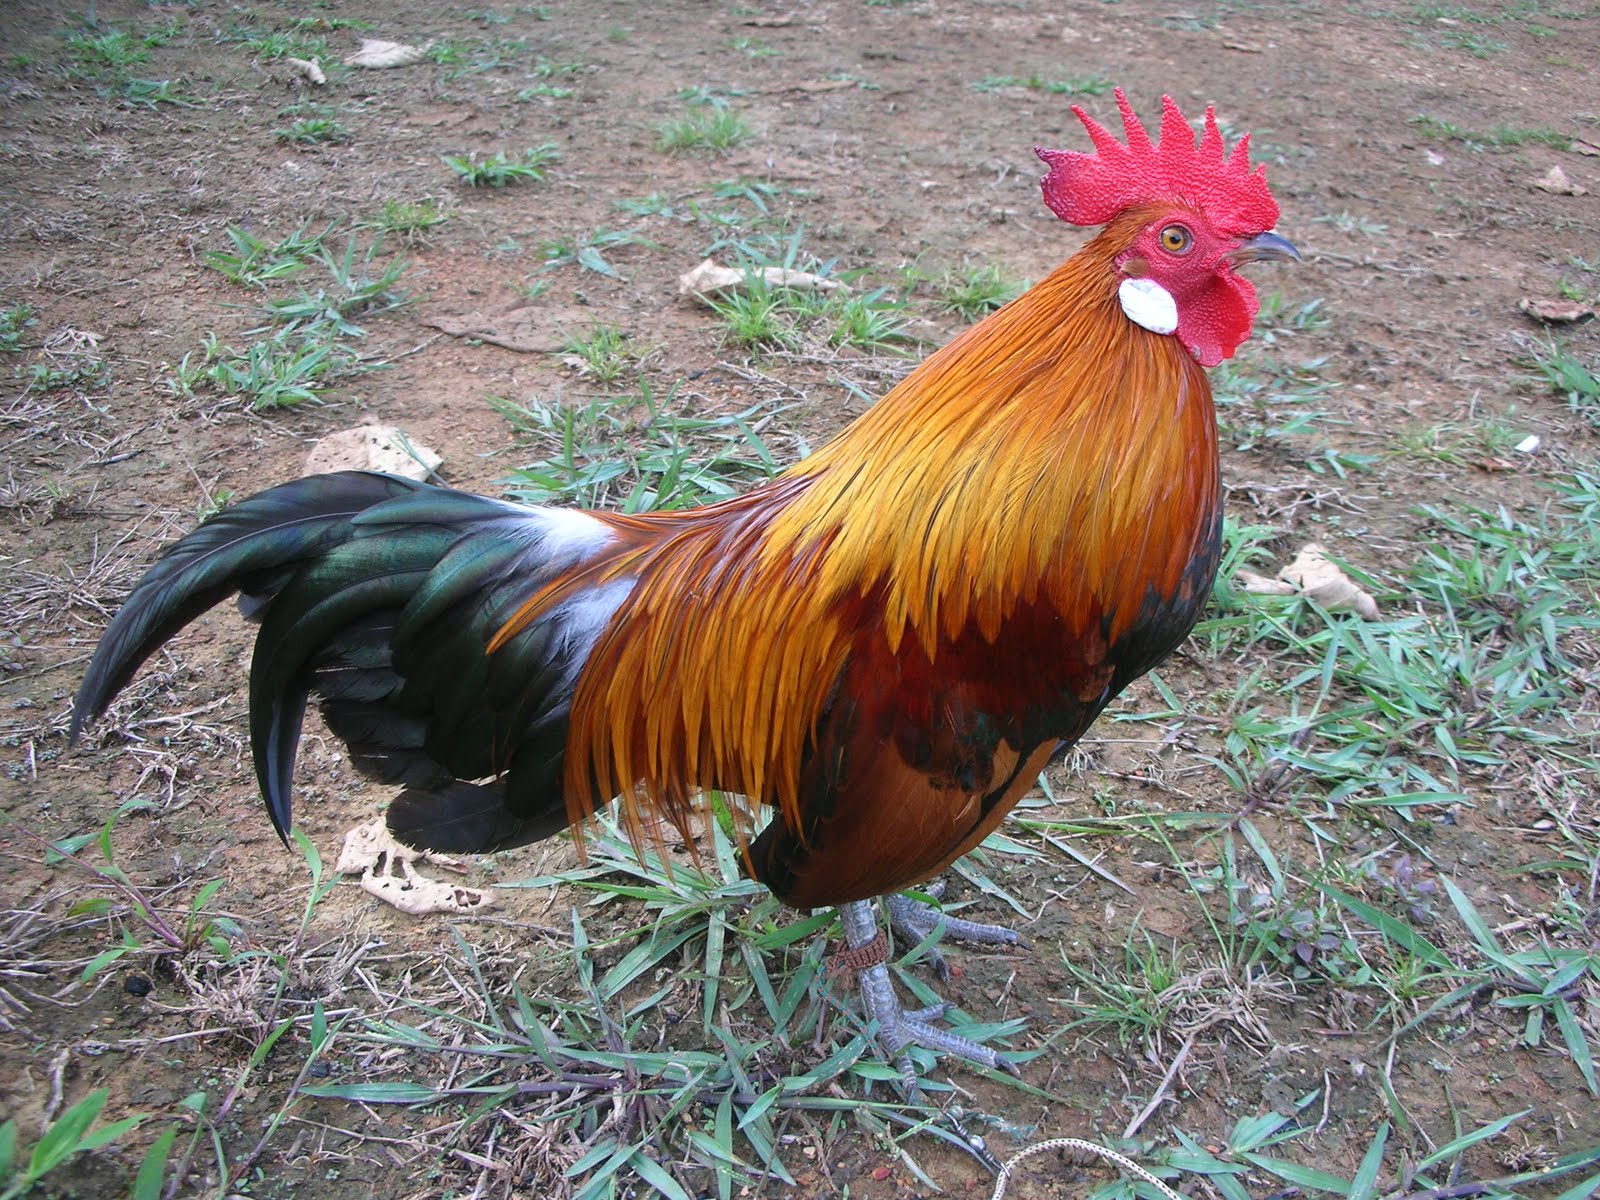  Gambar  Denak Ayam  Hutan Pikat Ade Gambar  Bagus di Rebanas 